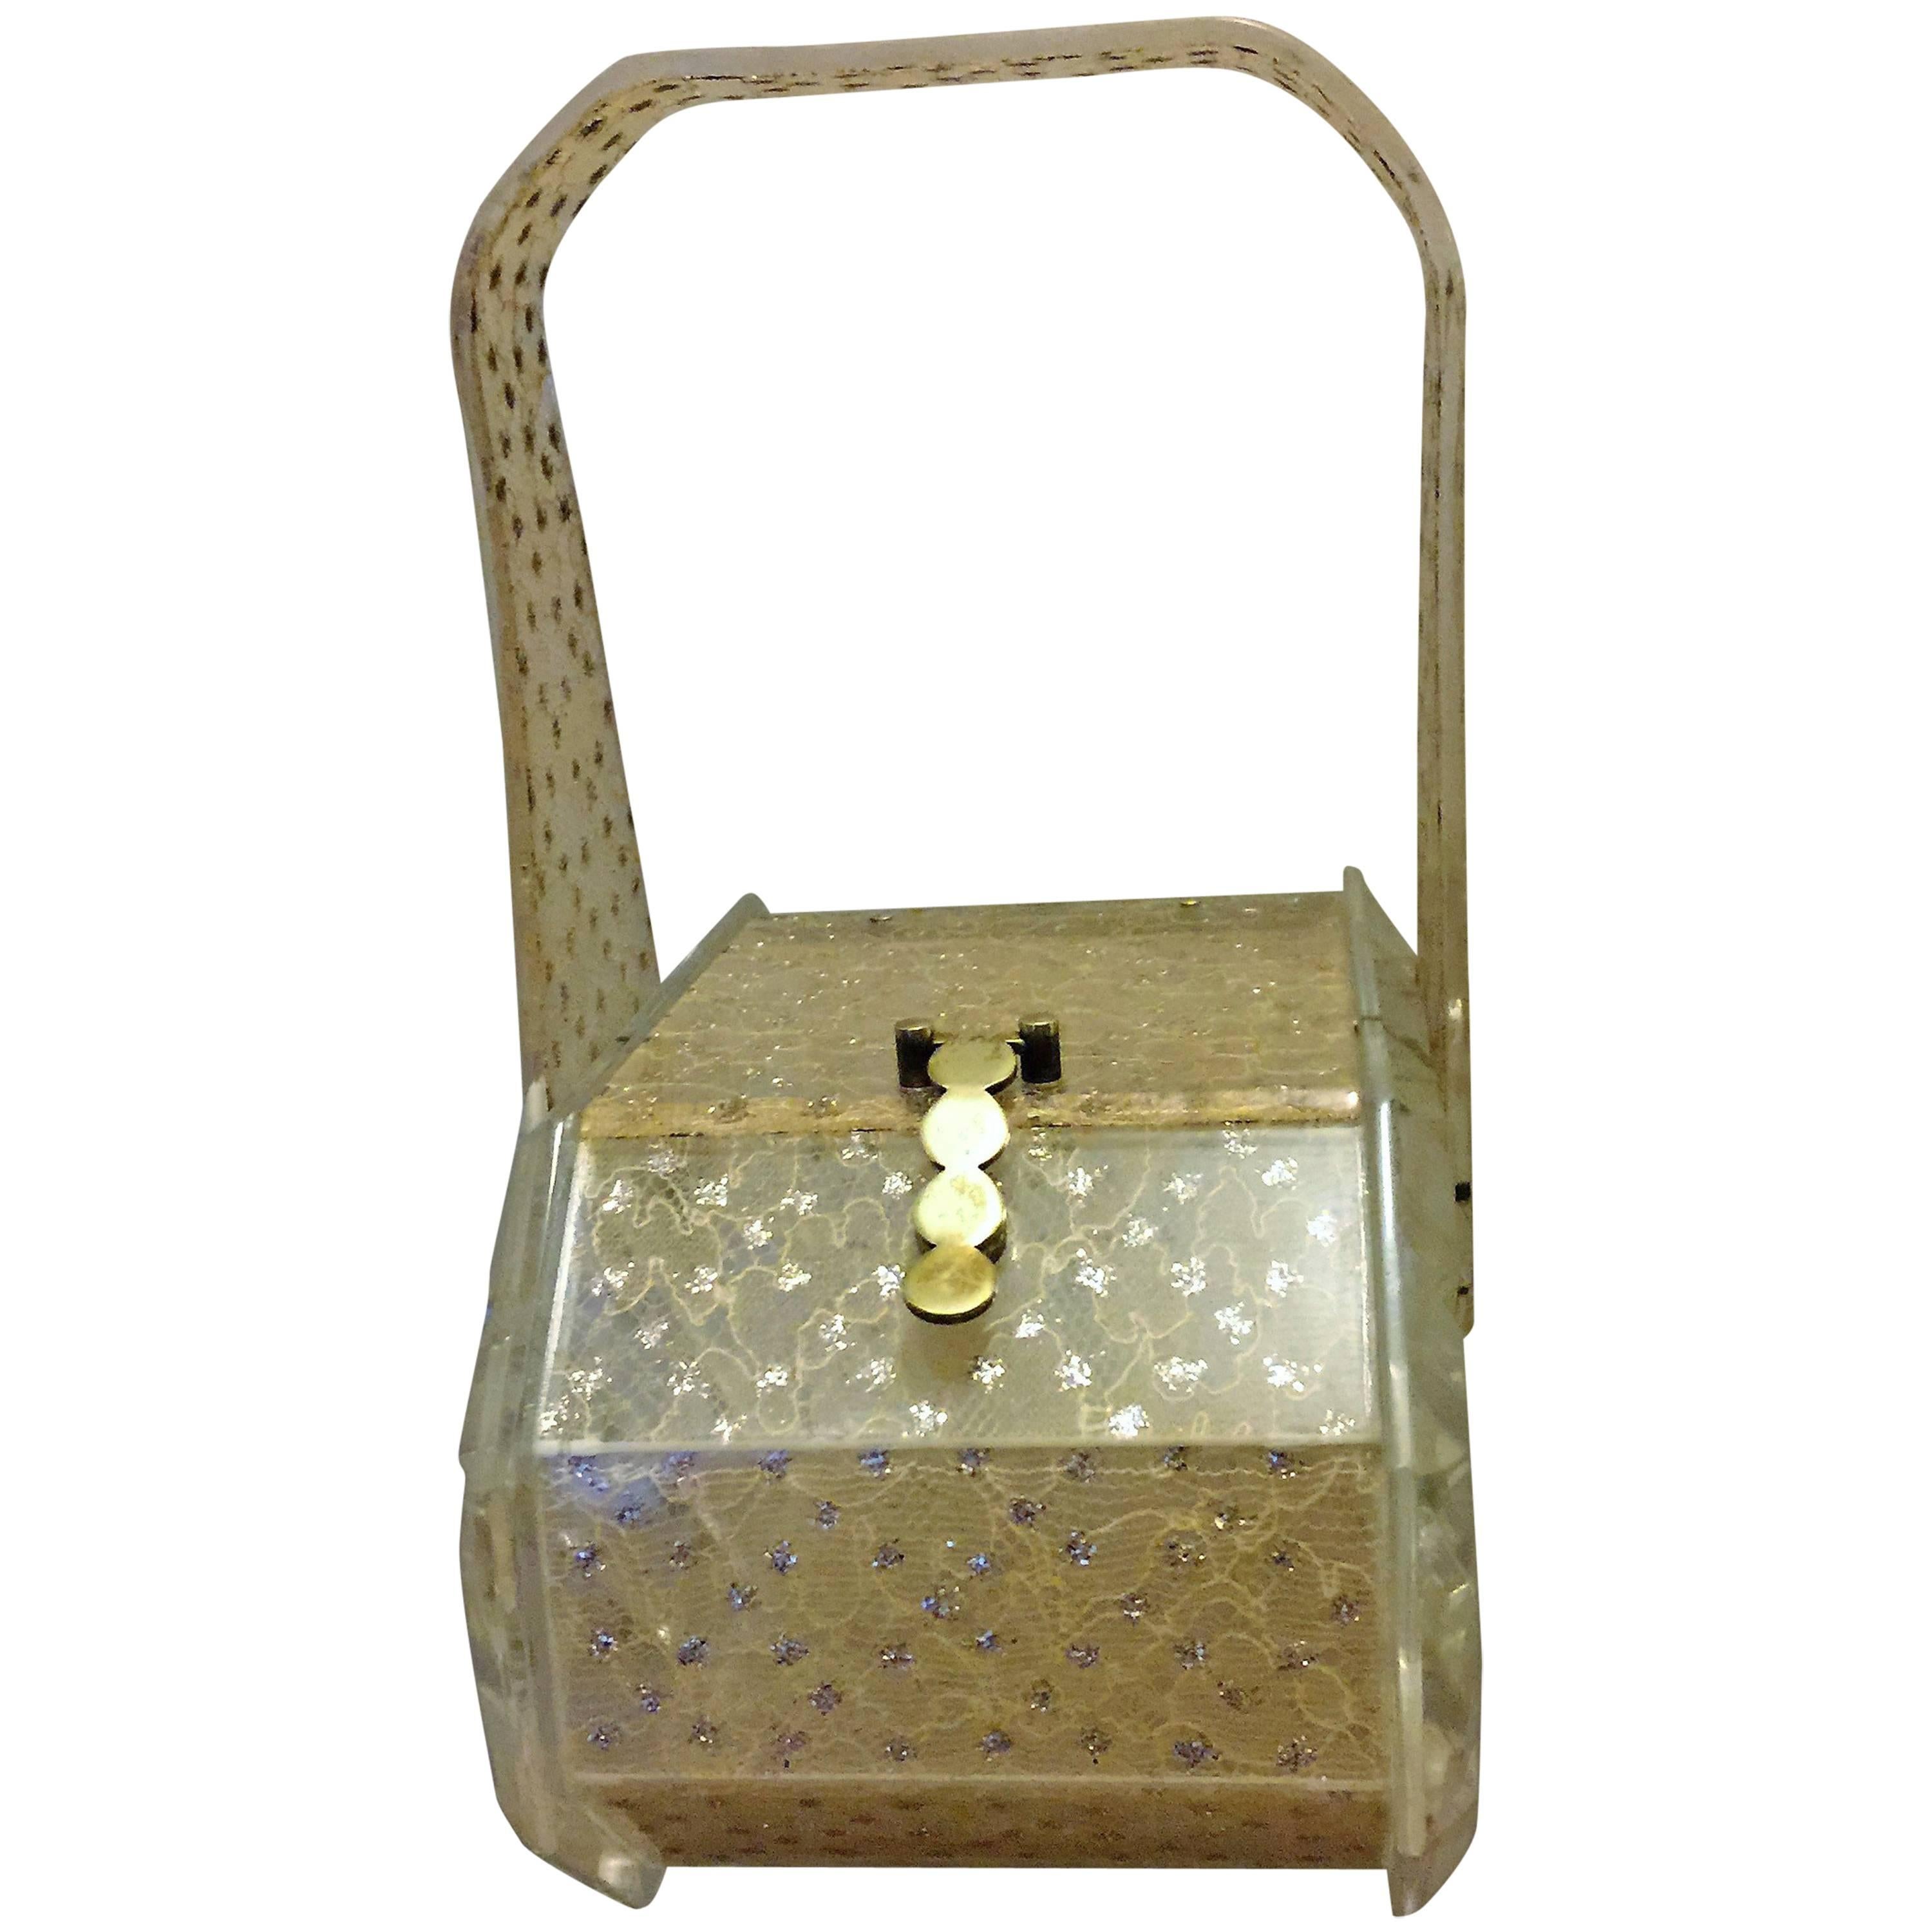 Interesting Octagonal Design Gold Lace And Carved Lucite Handbag For Sale